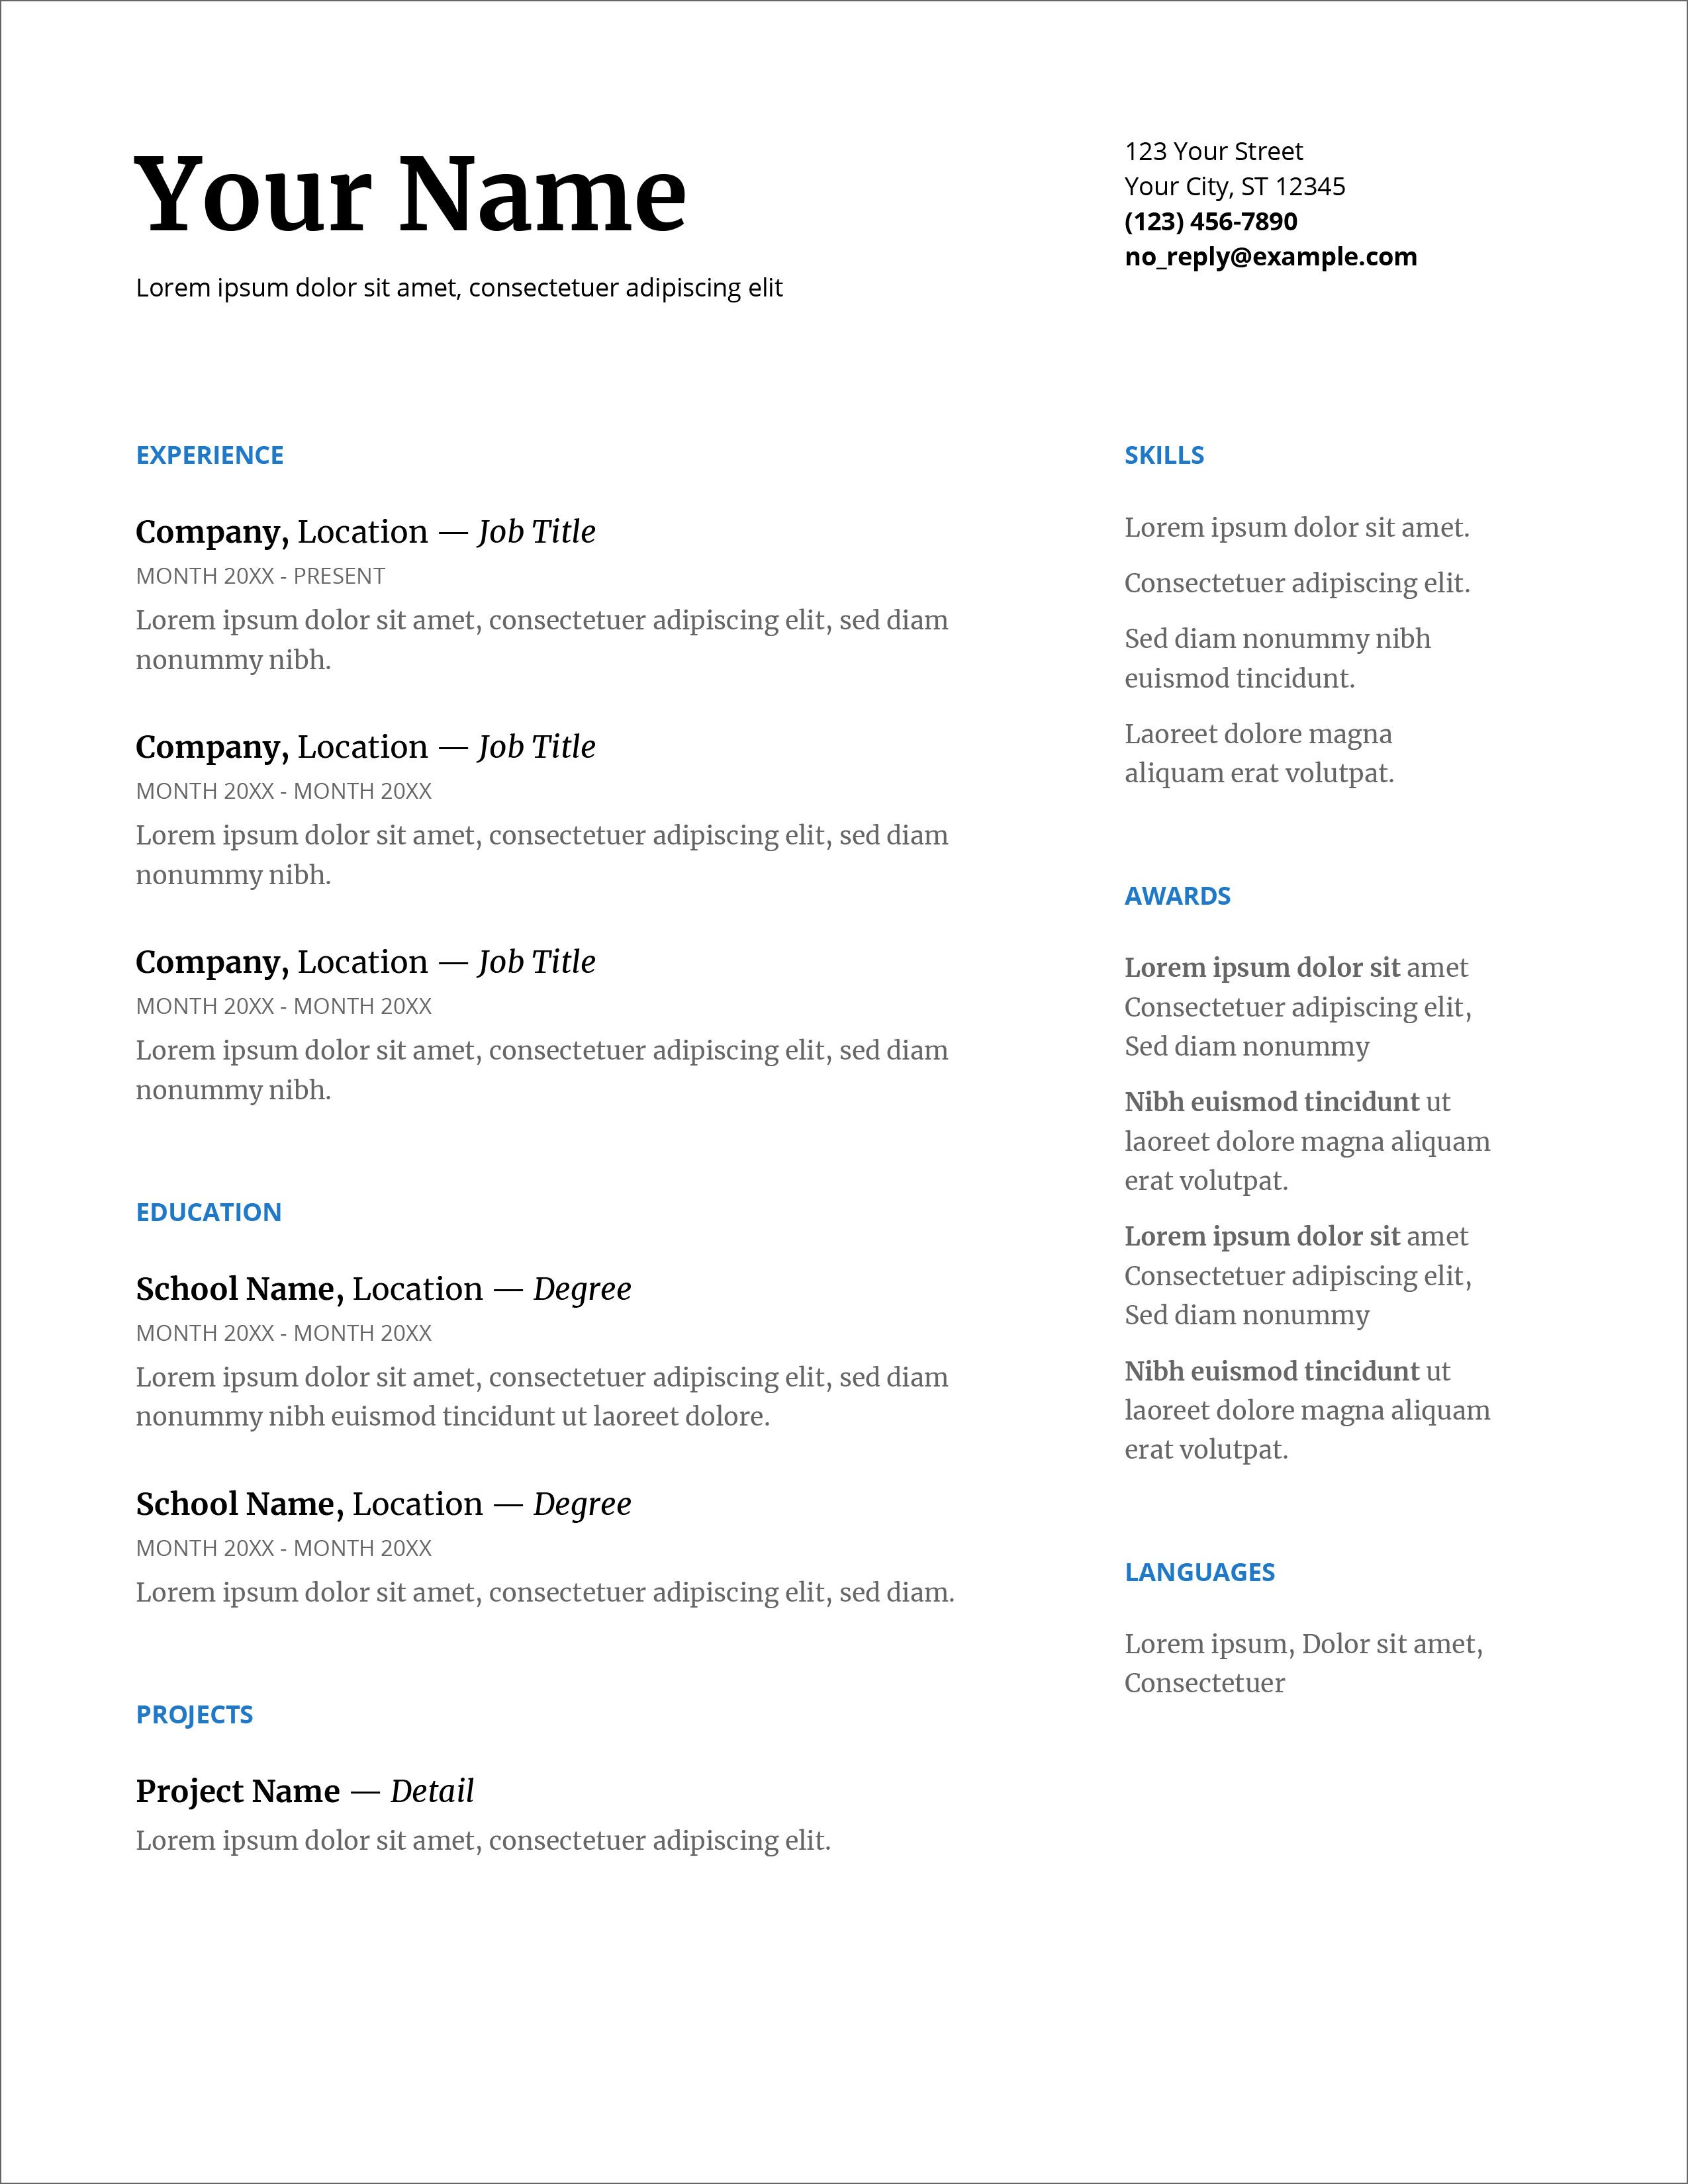 Resume Format 2019 from cdn2.geckoandfly.com